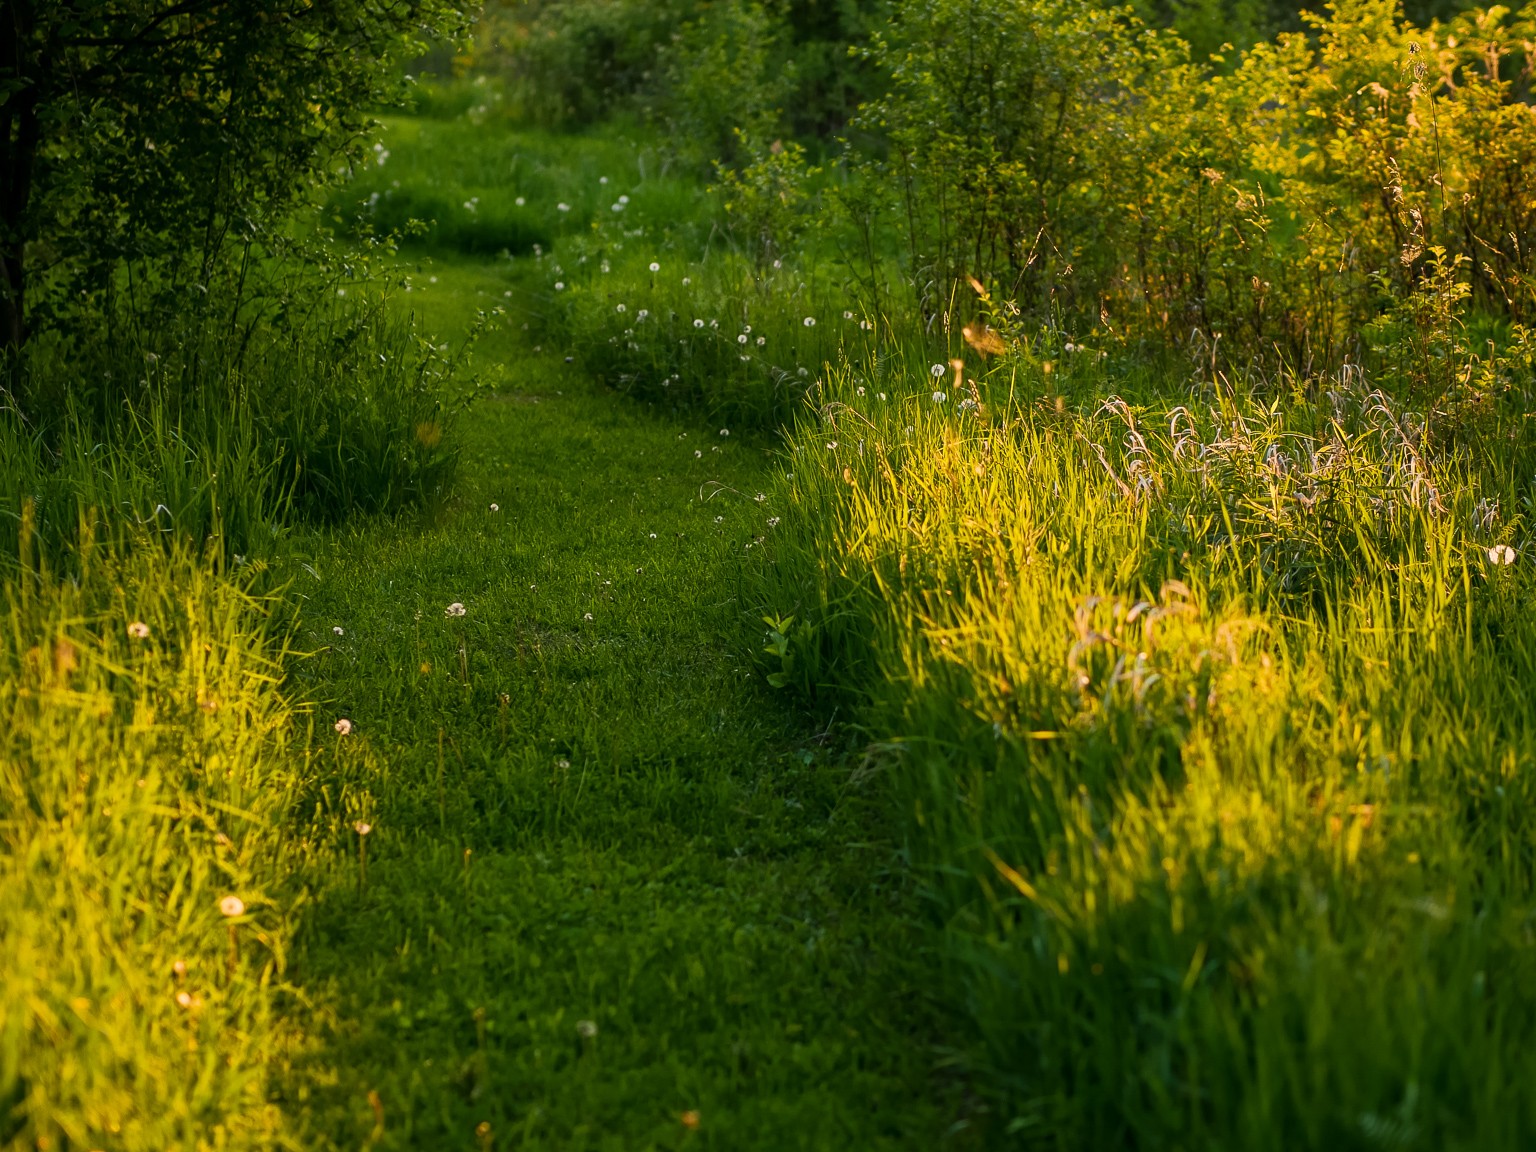 Grassy Path at Sunset